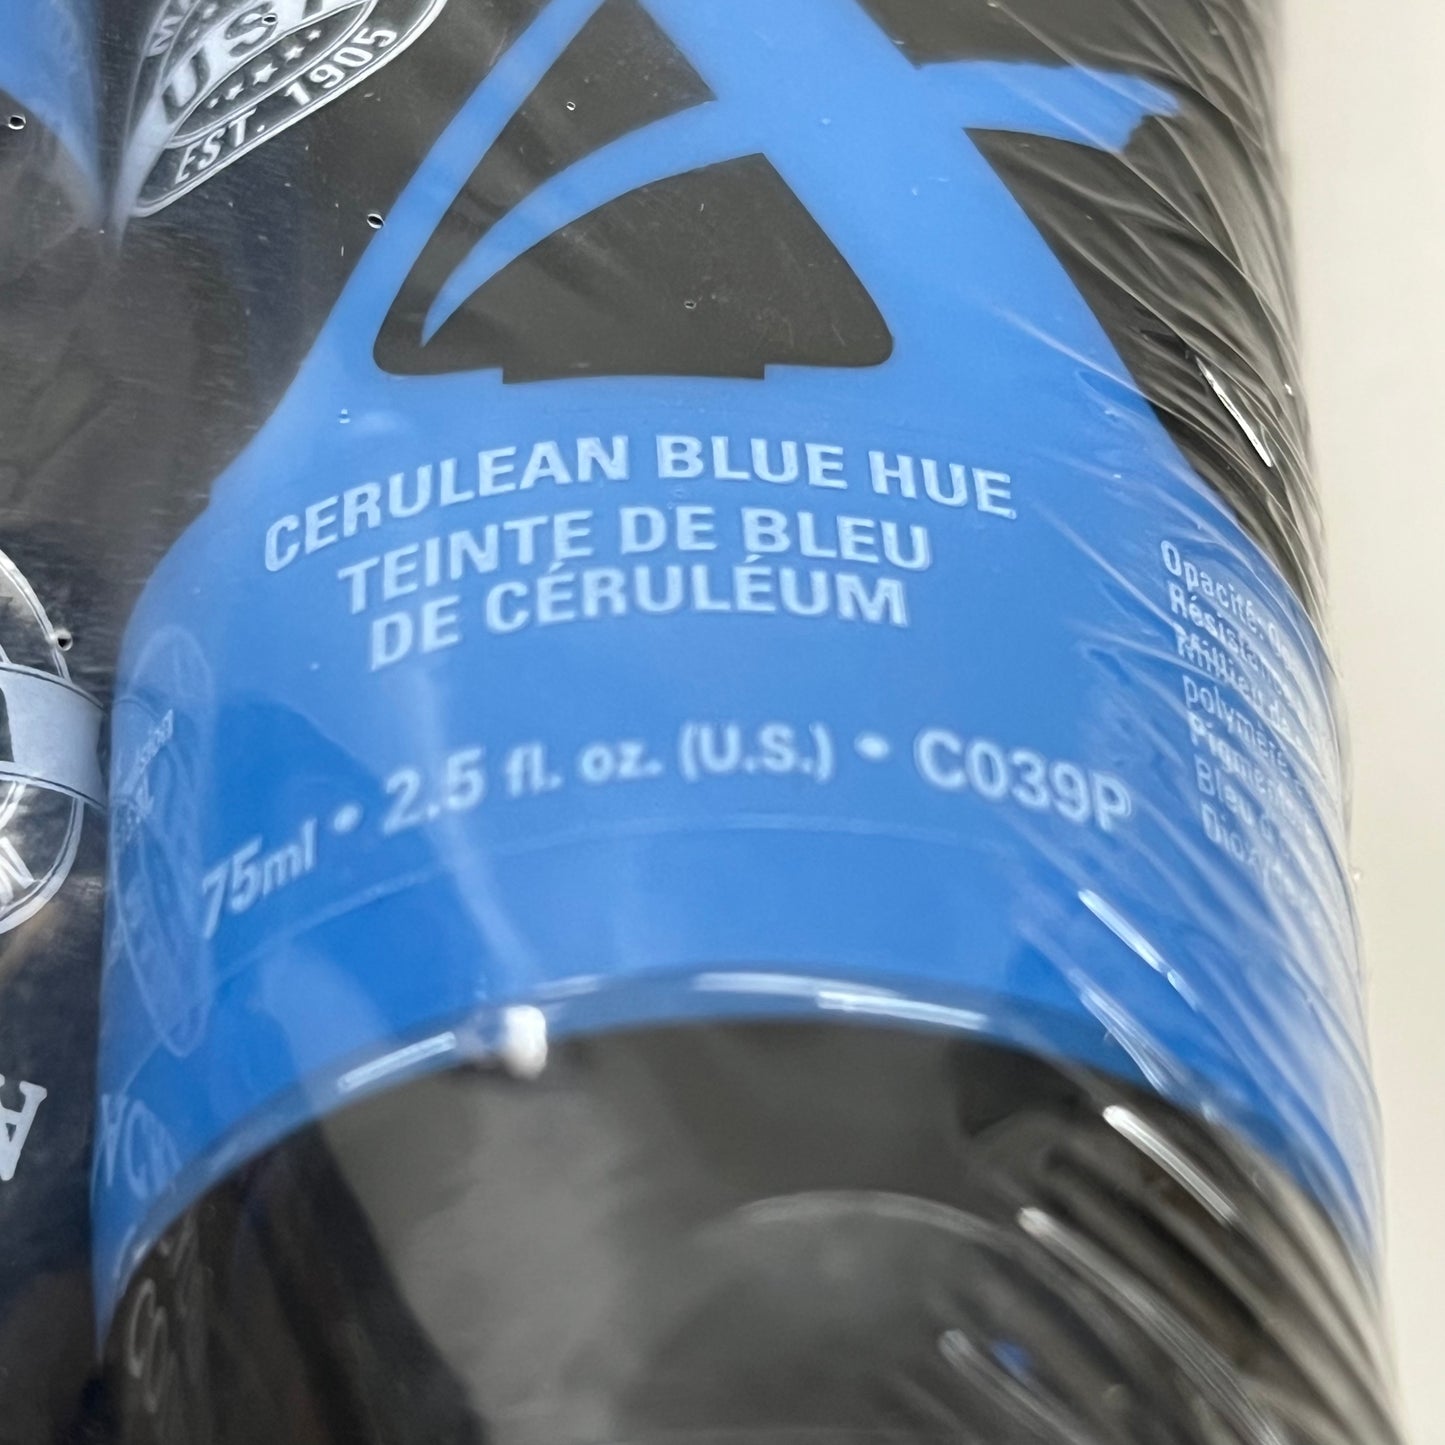 GRUMBACHER 3-PACK! Academy Acrylic Cerulean Blue Hue 2.5 fl oz / 75 ml C039P (New)